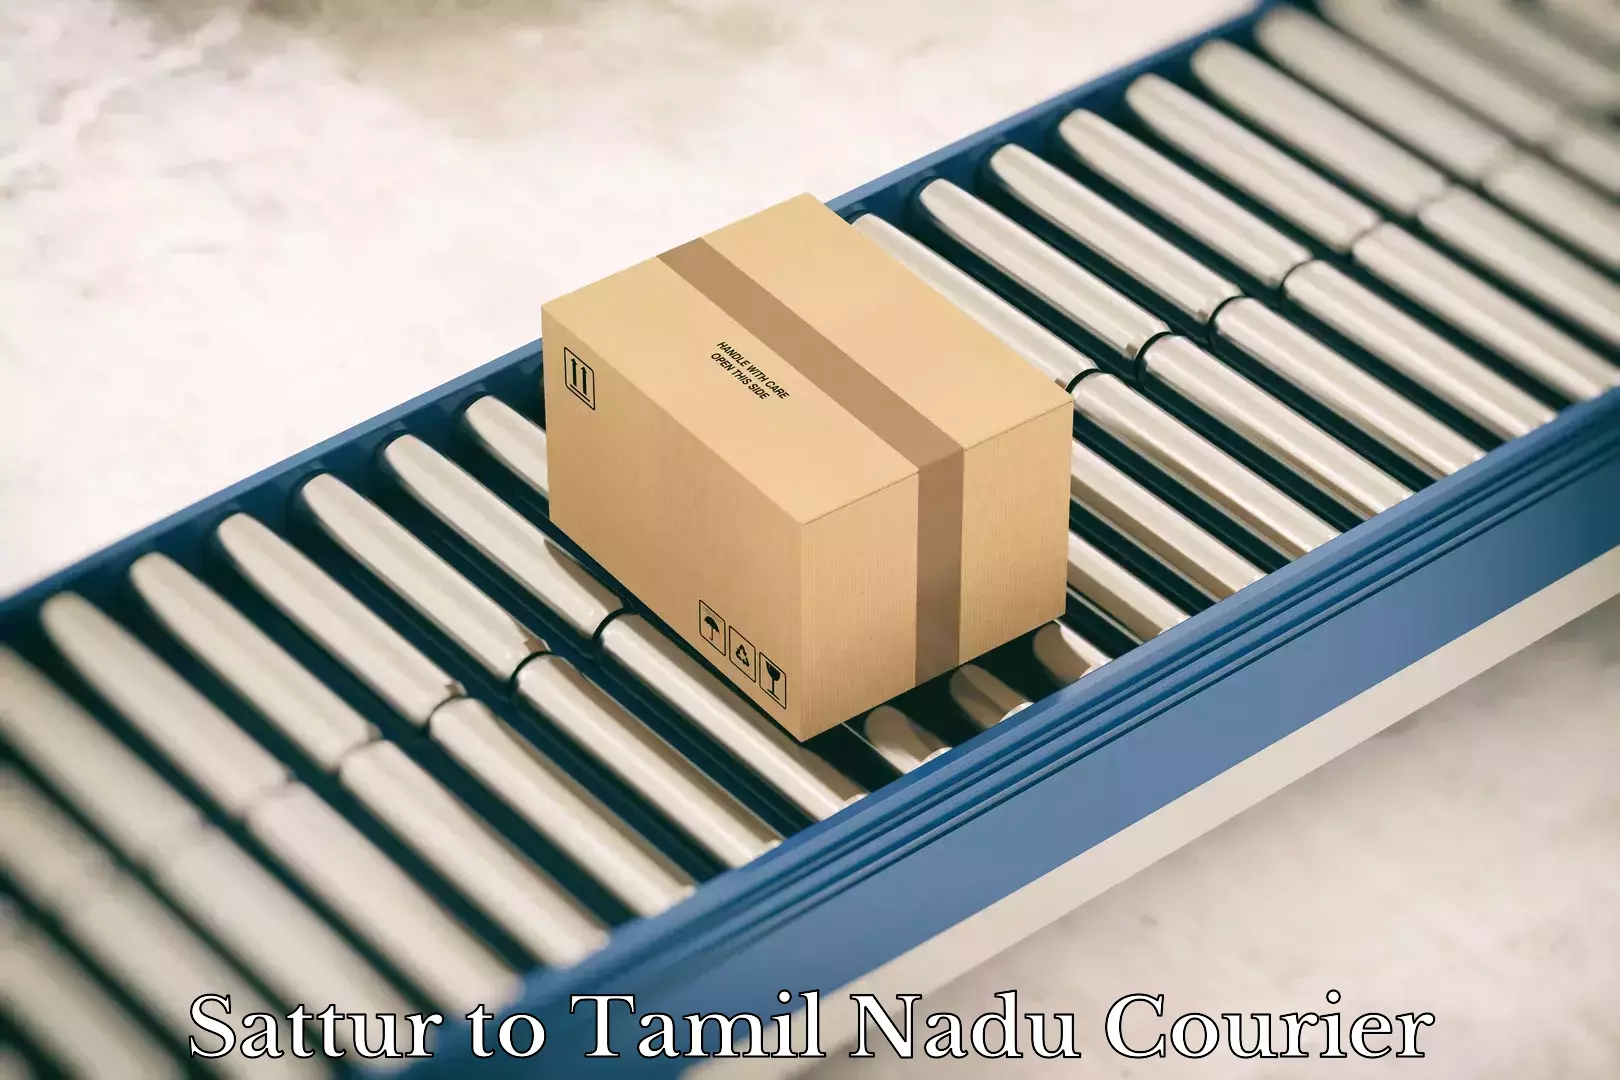 Package delivery network Sattur to Tamil Nadu